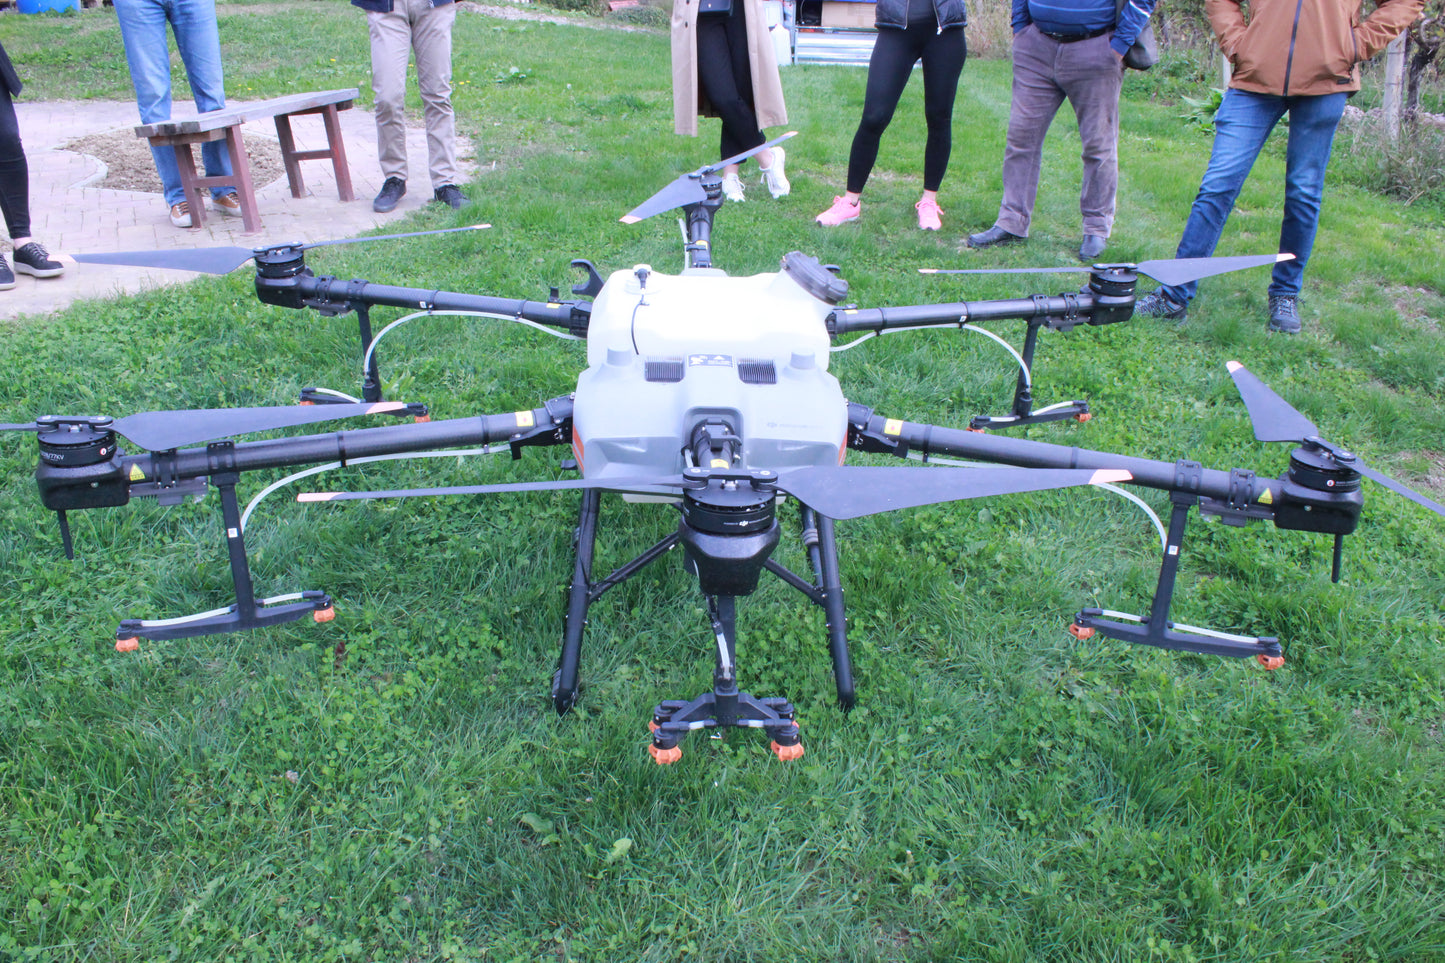 Obuka za poljoprivredne dronove: unaprijedite svoje poljoprivredne prakse